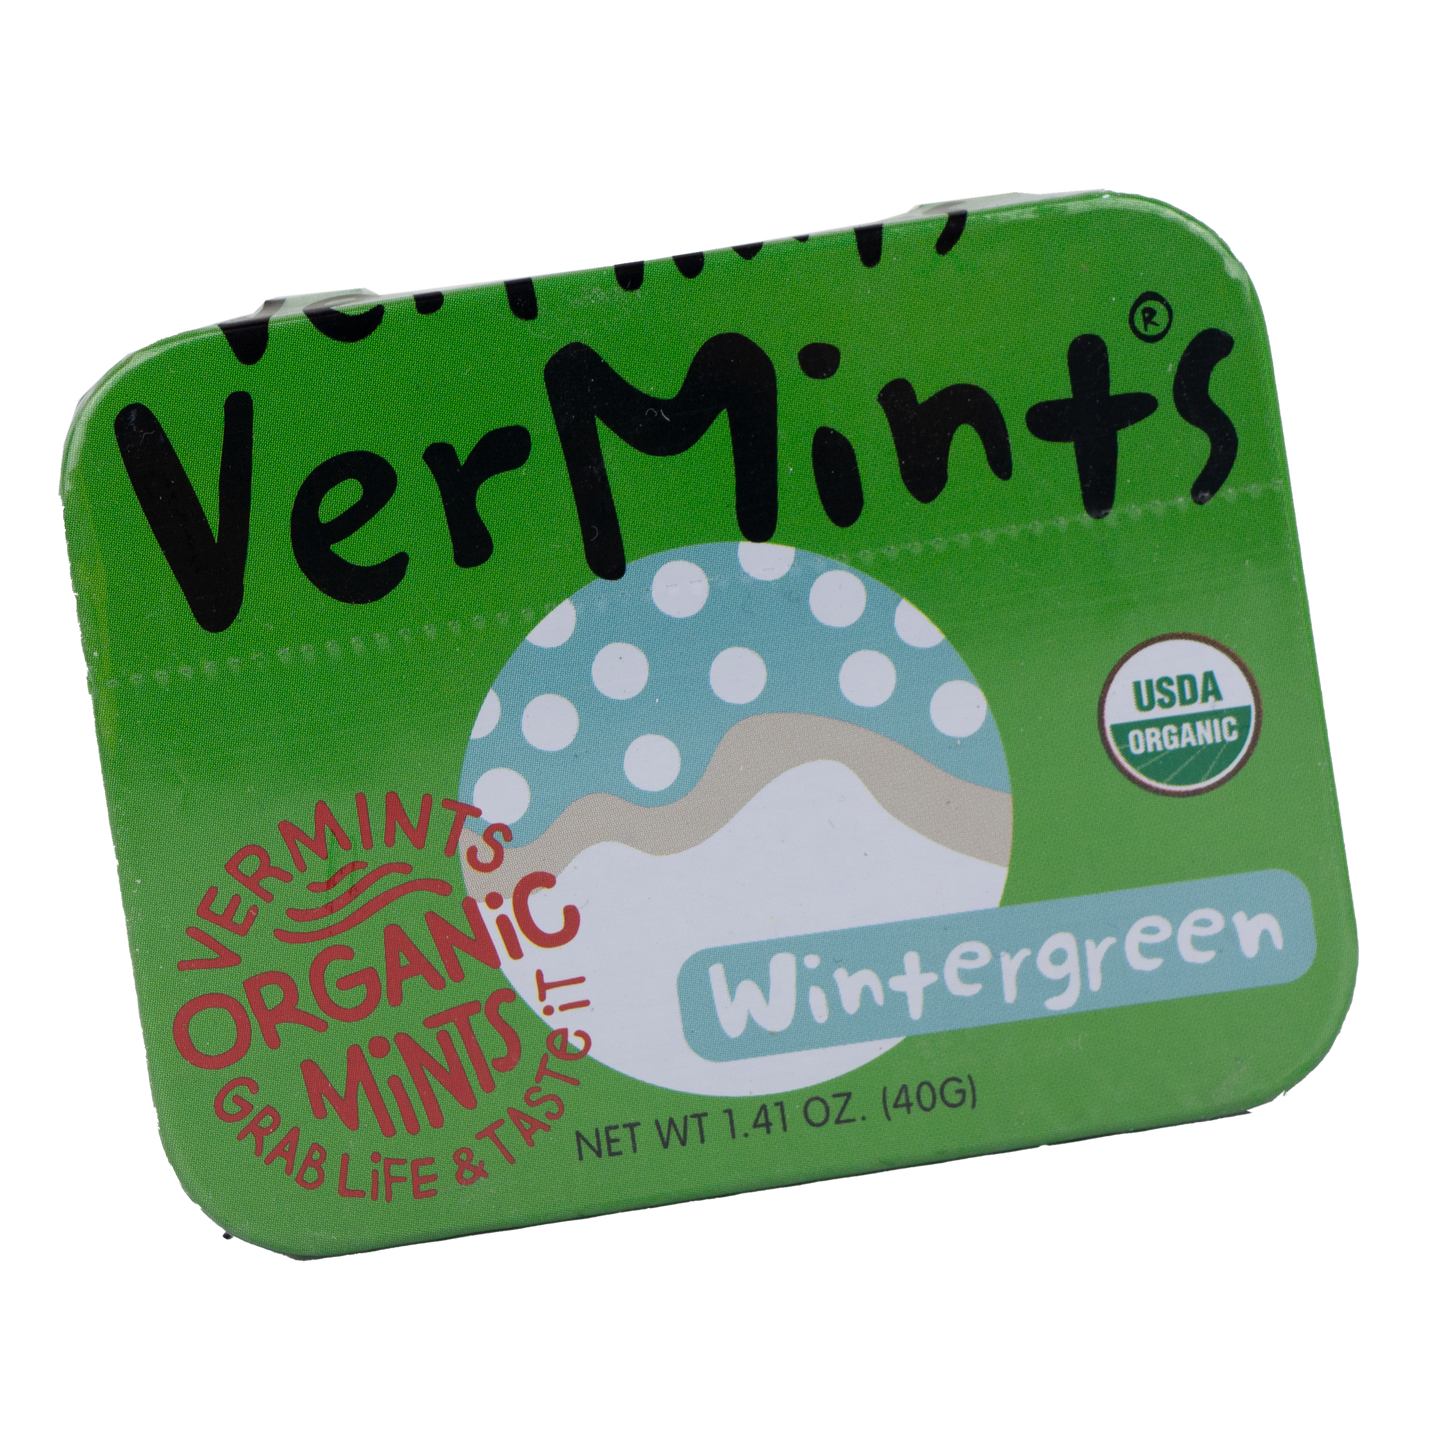 Ver Mints - Wintergreen